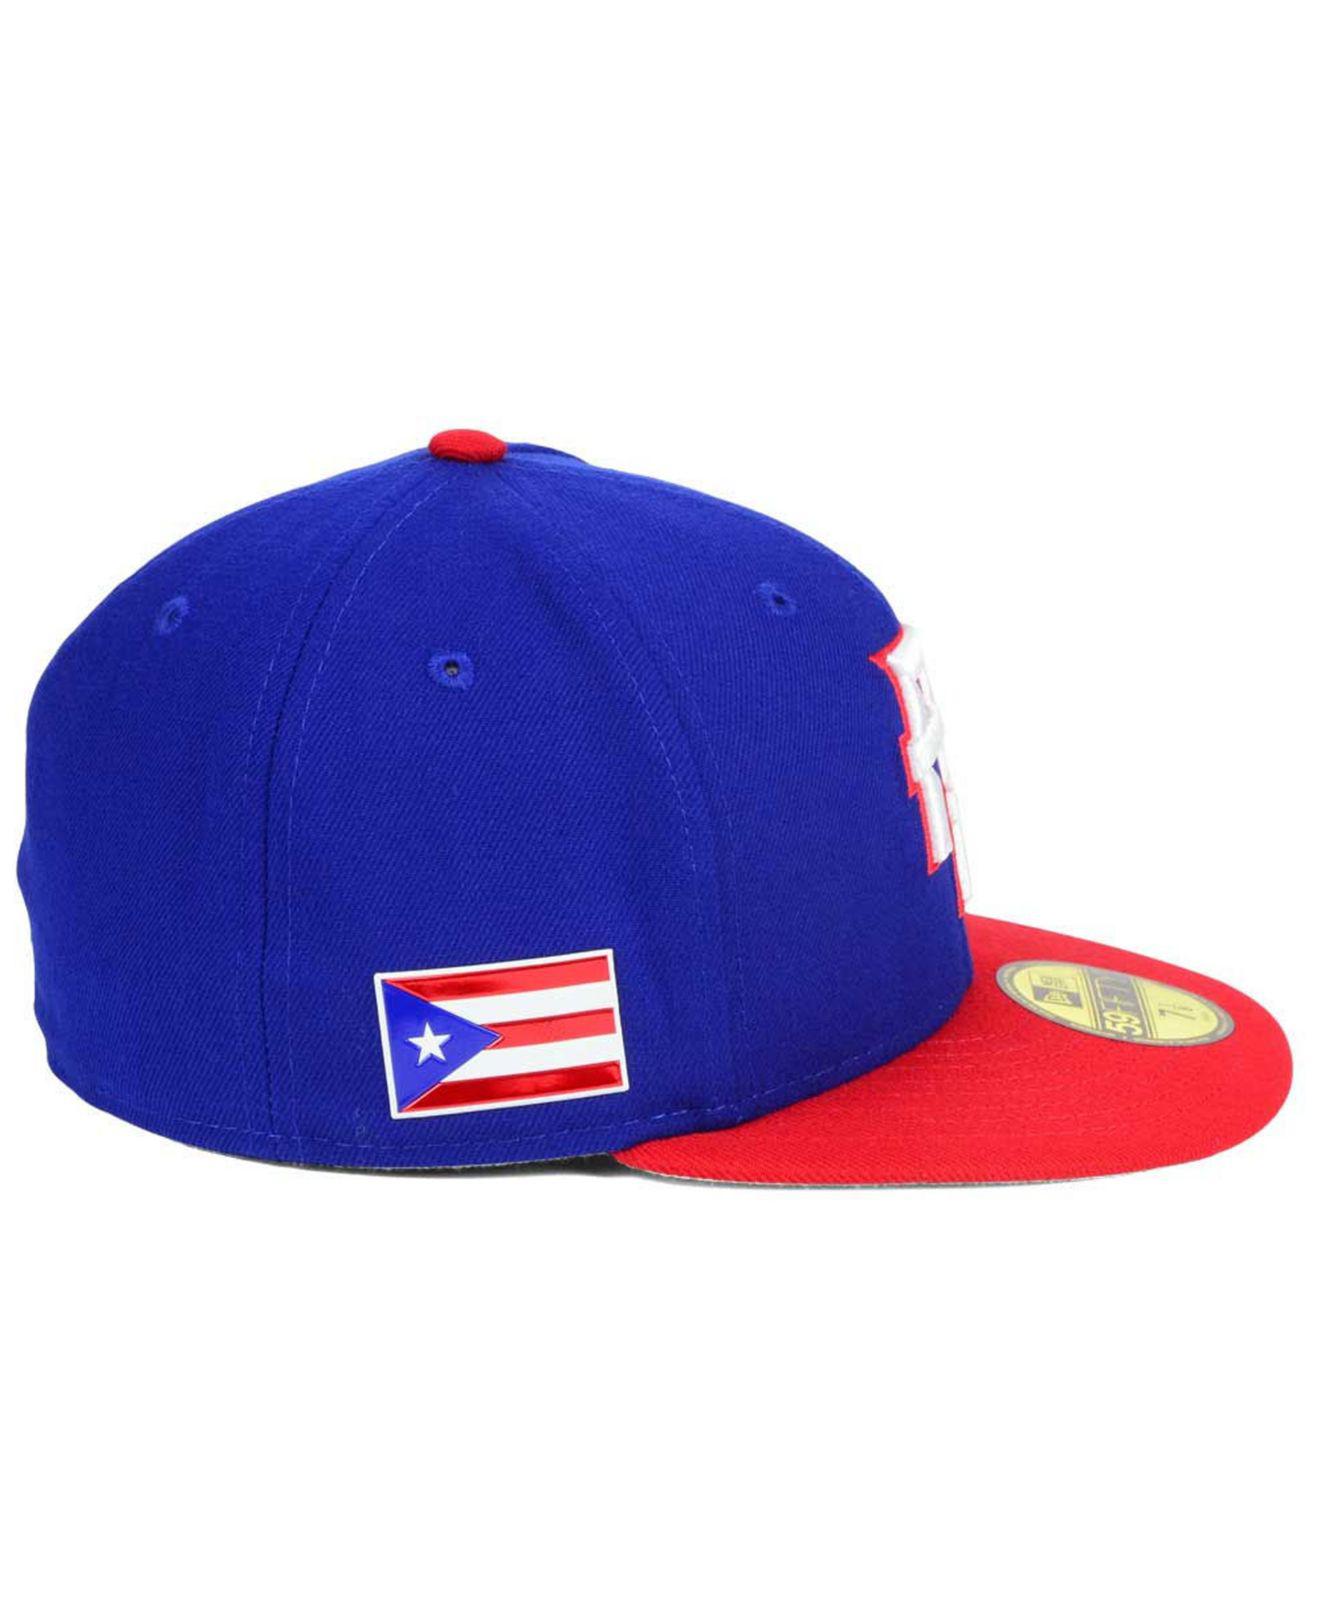 wbc puerto rico hat